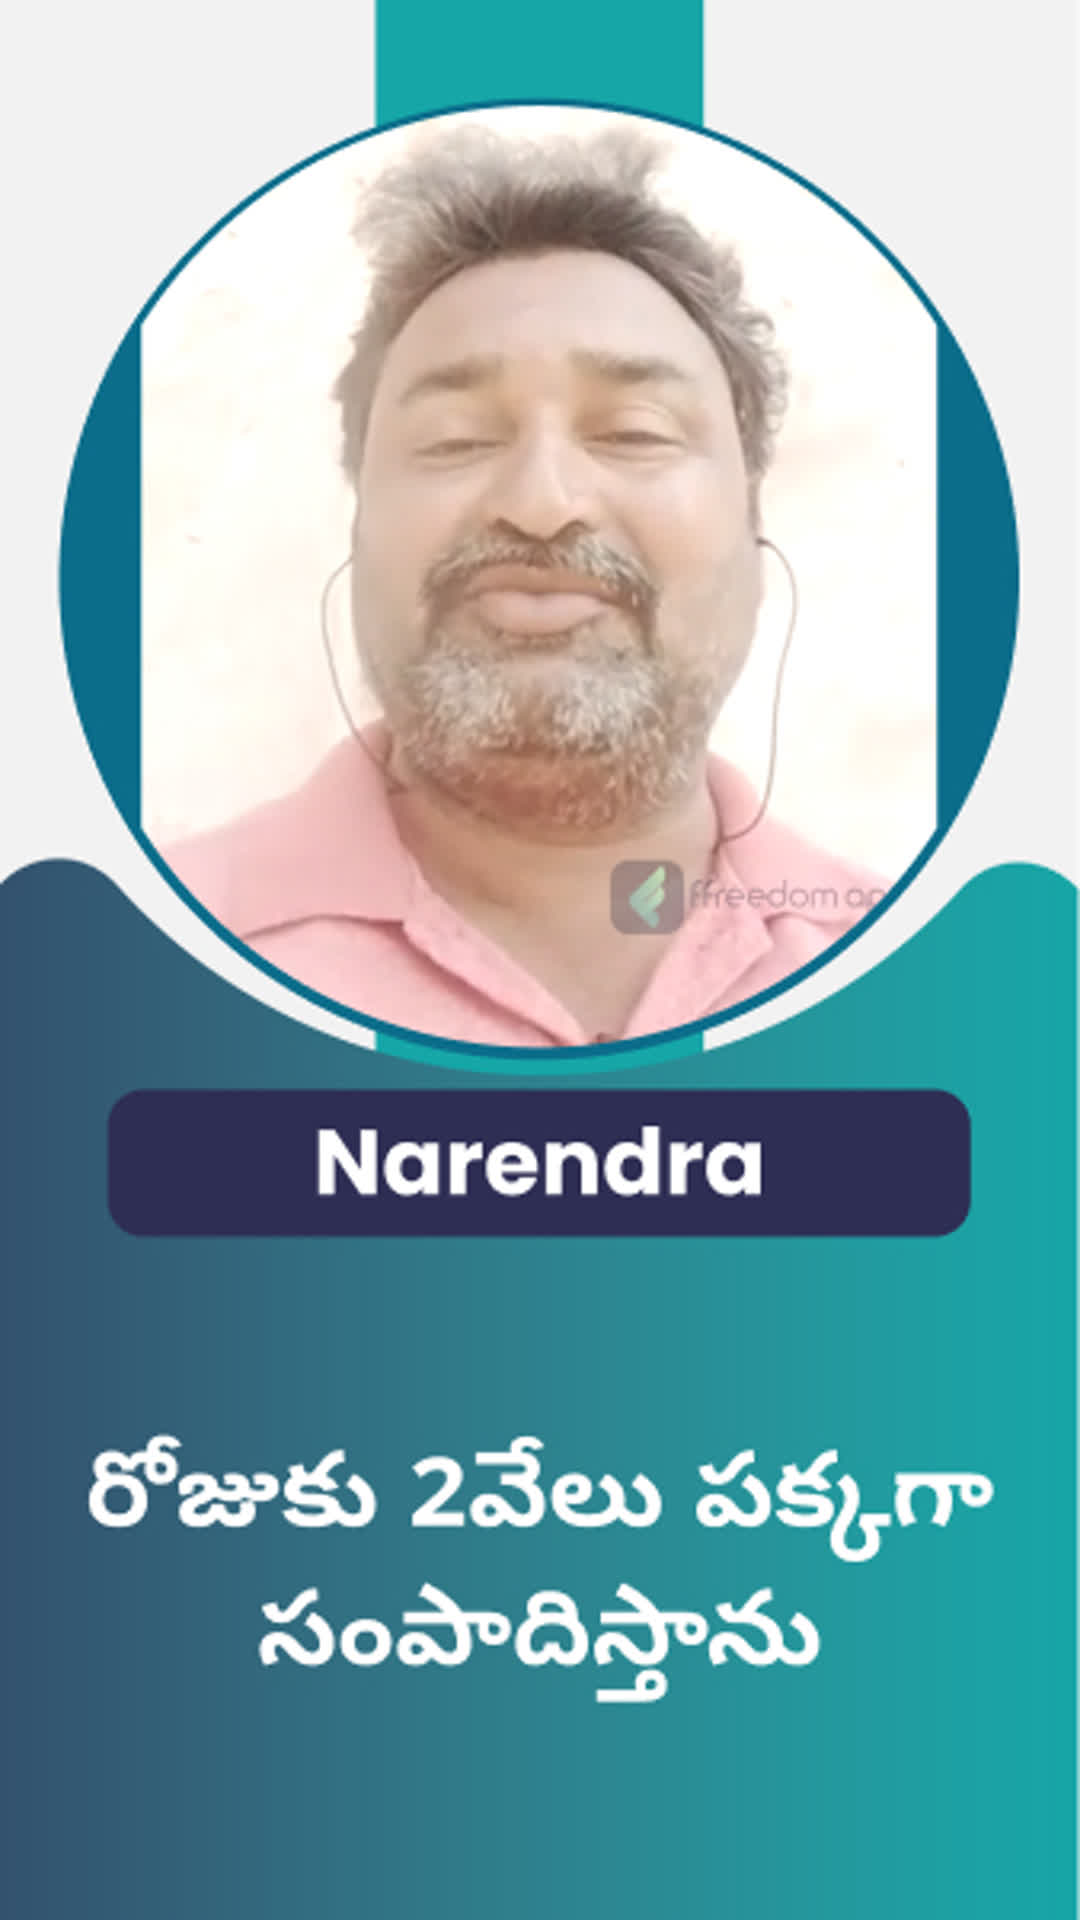 K narendra sathish's Honest Review of ffreedom app - Ballari ,Karnataka